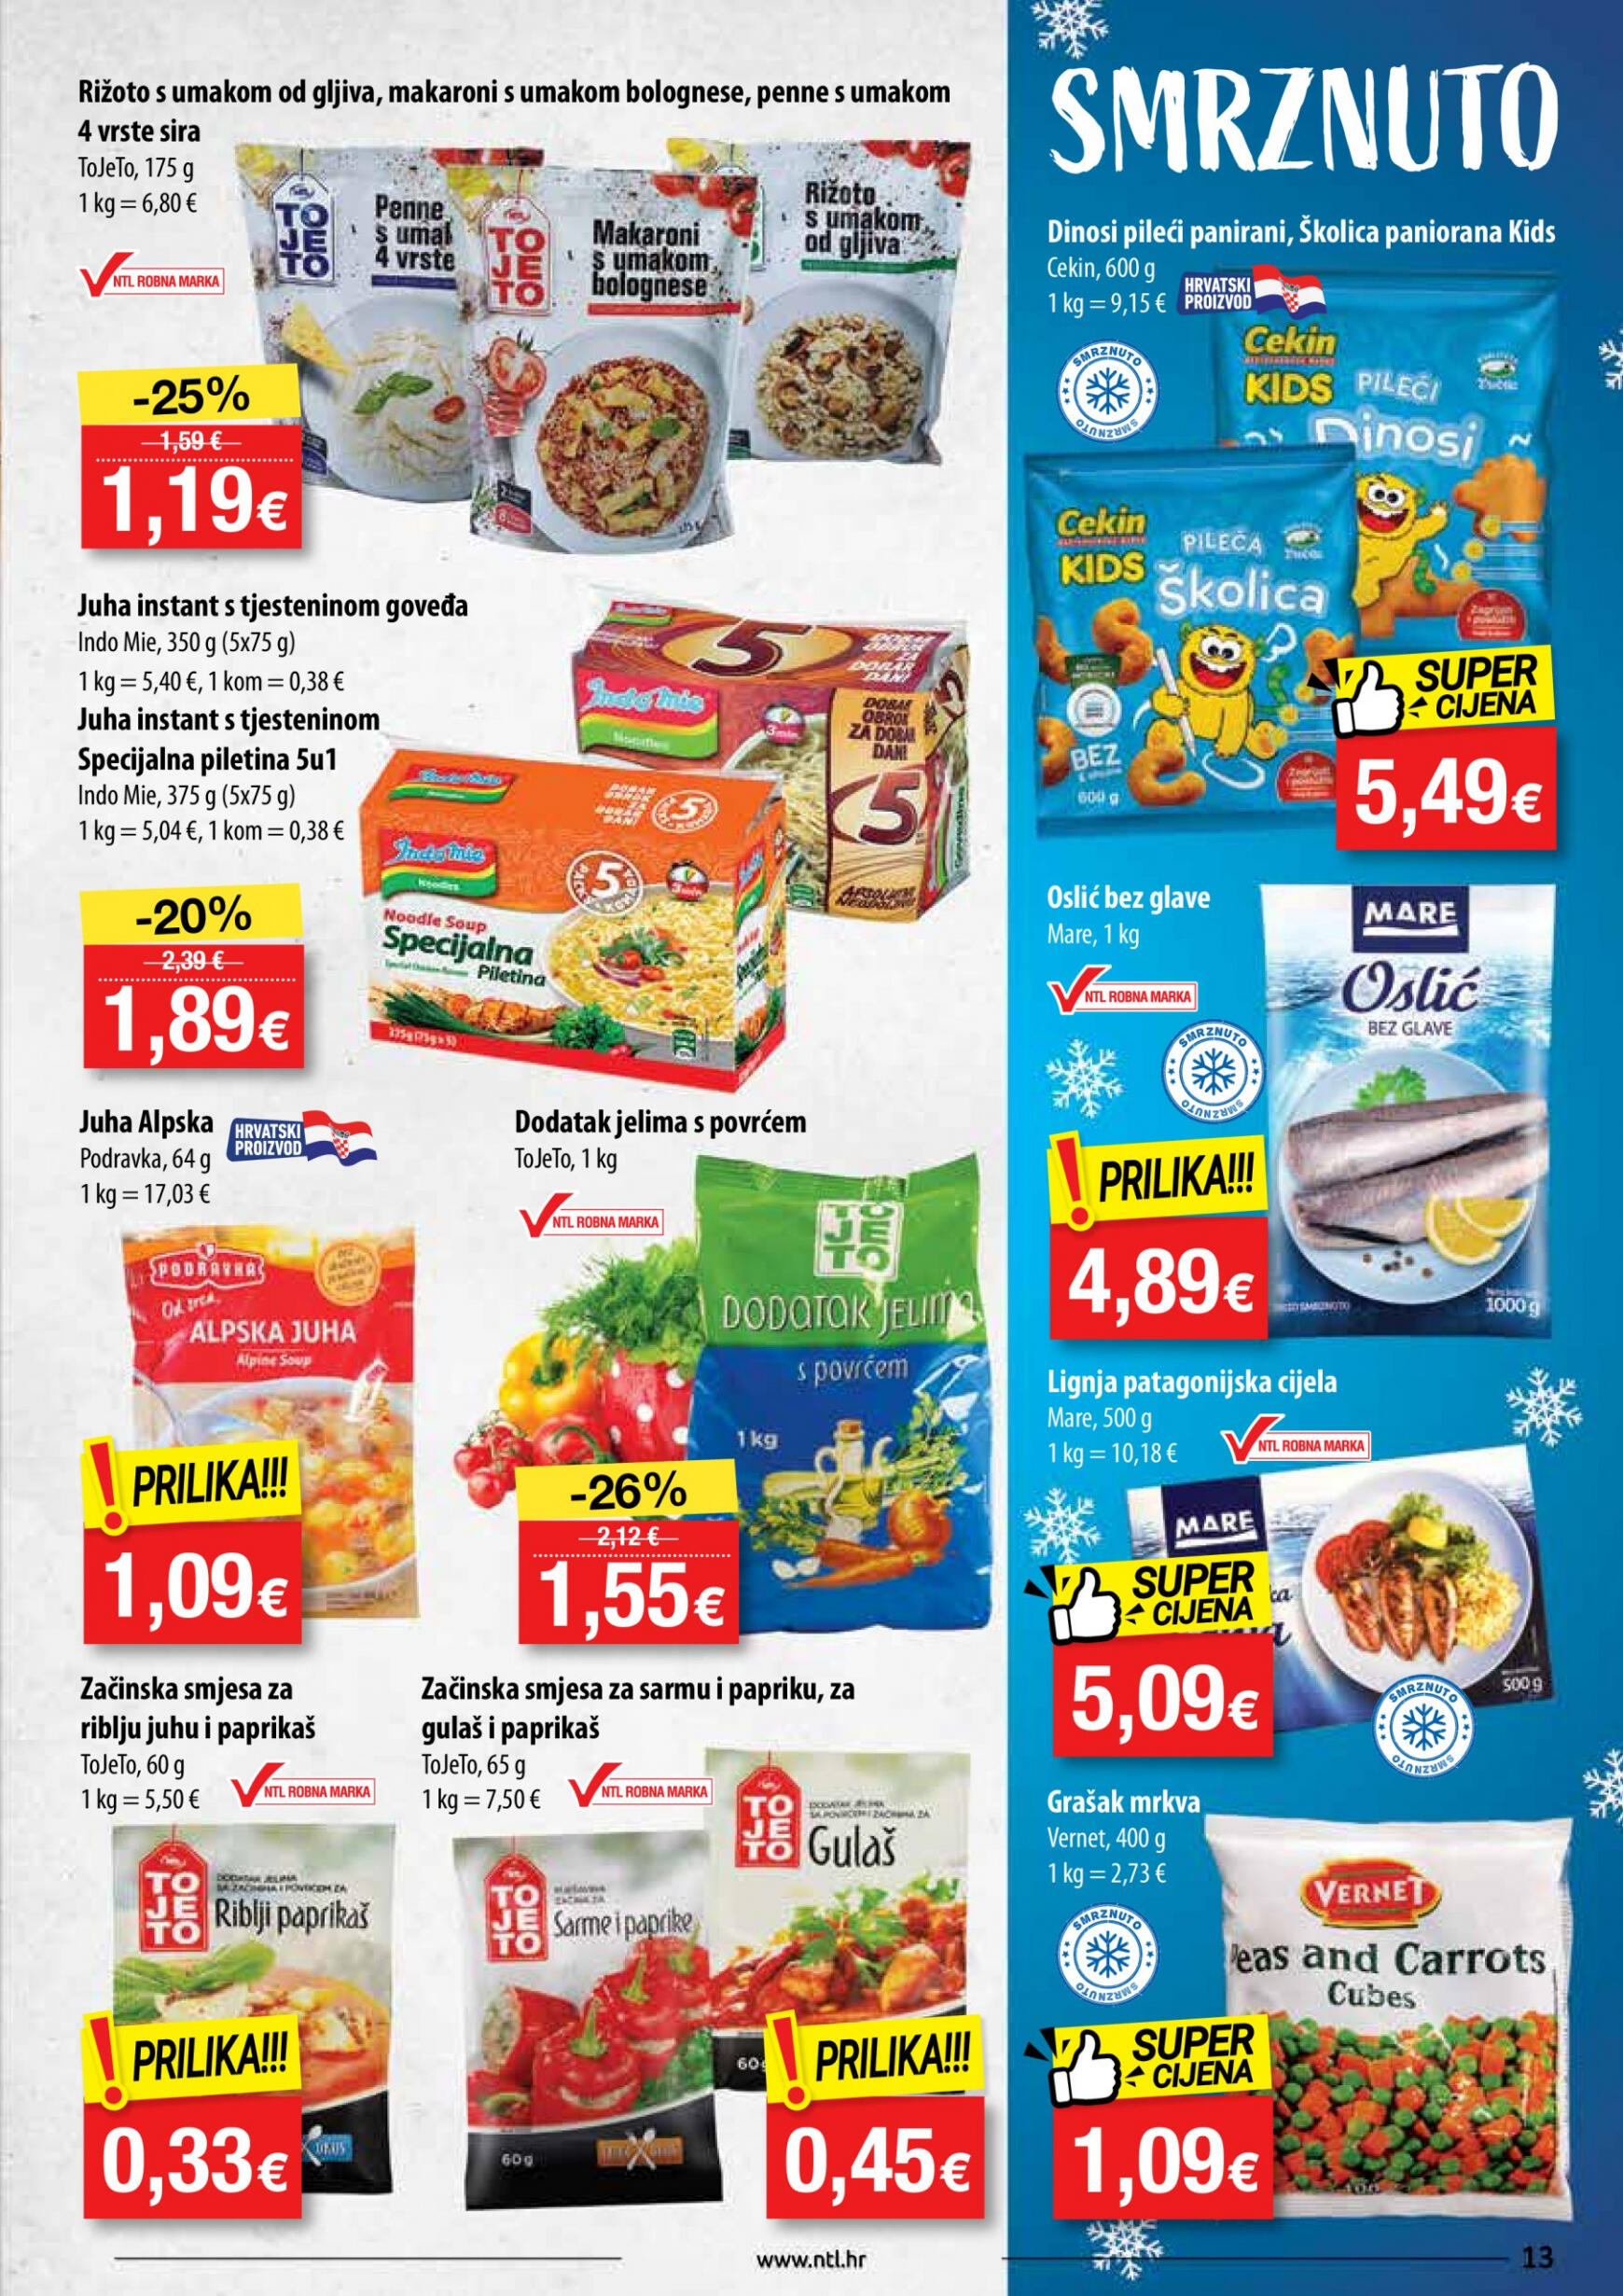 ntl - Novi katalog NTL - Supermarketi Soblinec, Krapina, Duga Resa 10.04. - 16.04. - page: 13